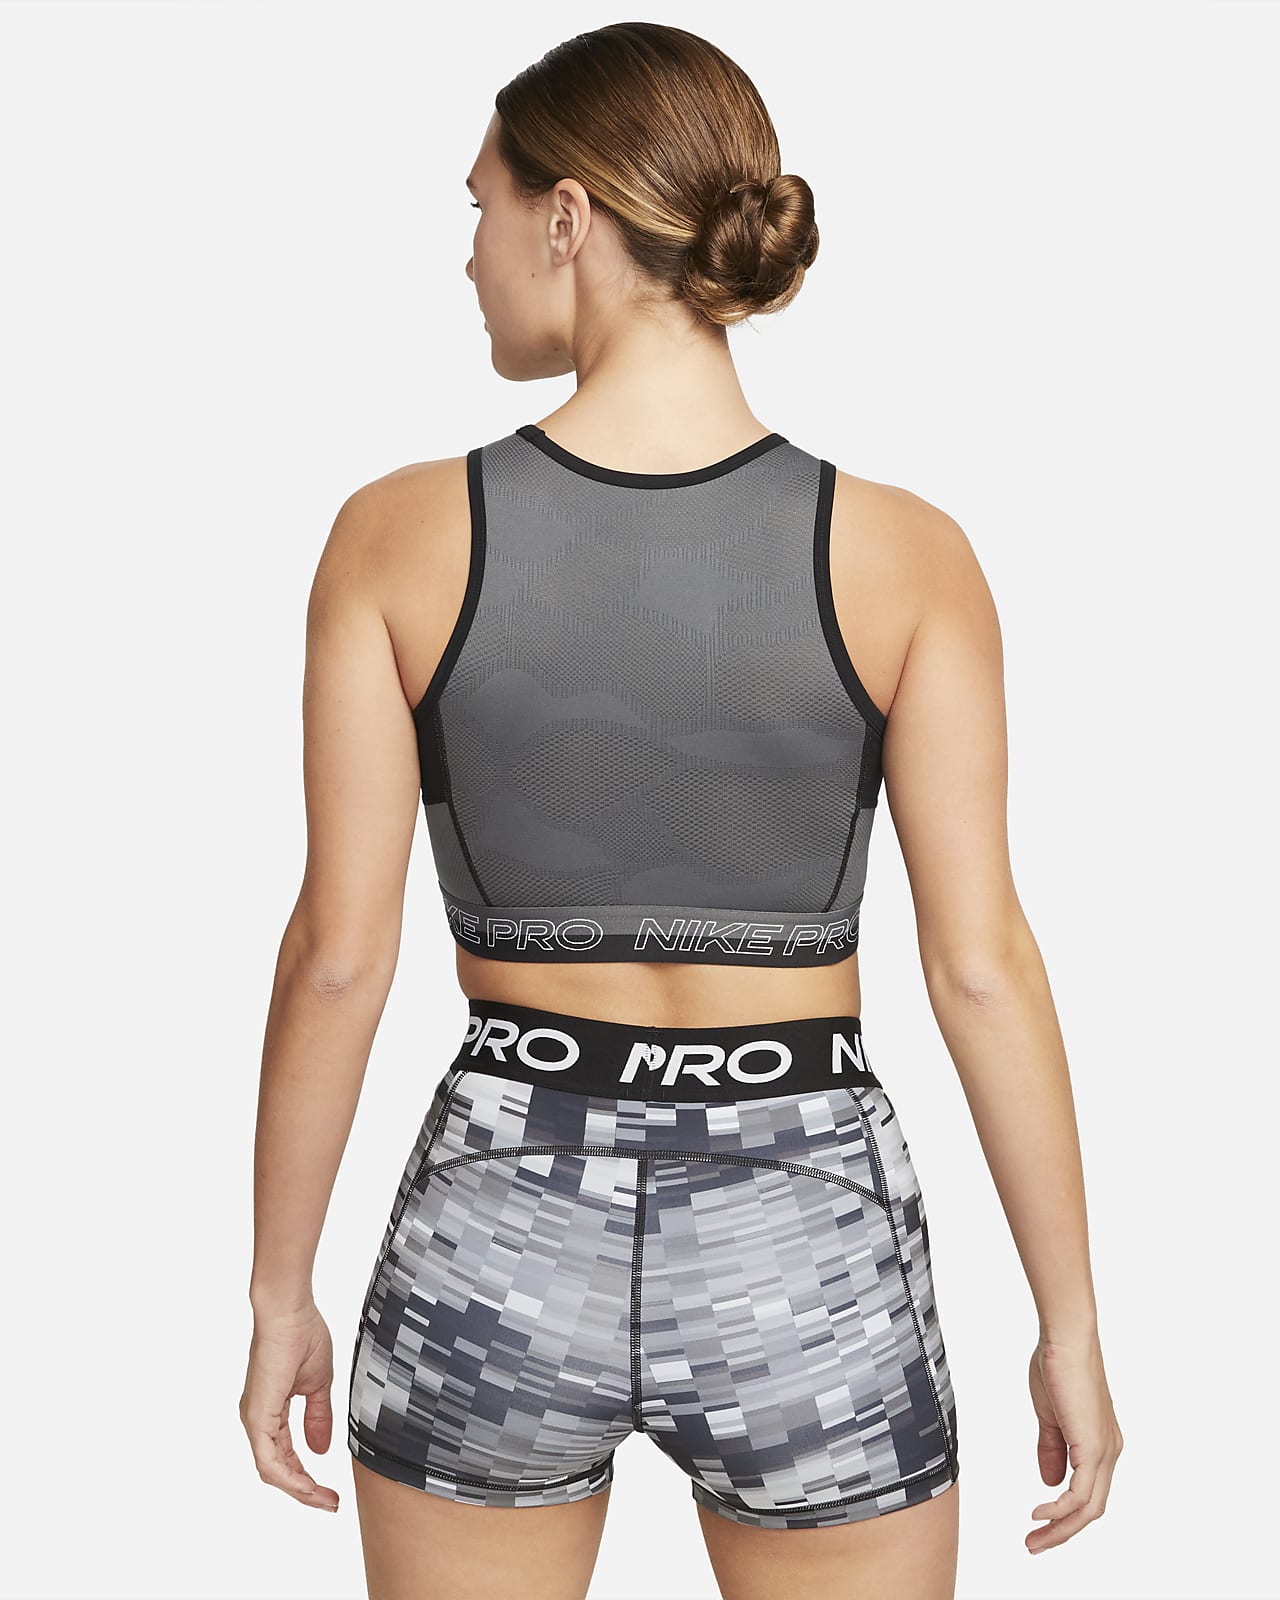 Nike Pro Dri-FIT Women's Cropped Training Tank Top